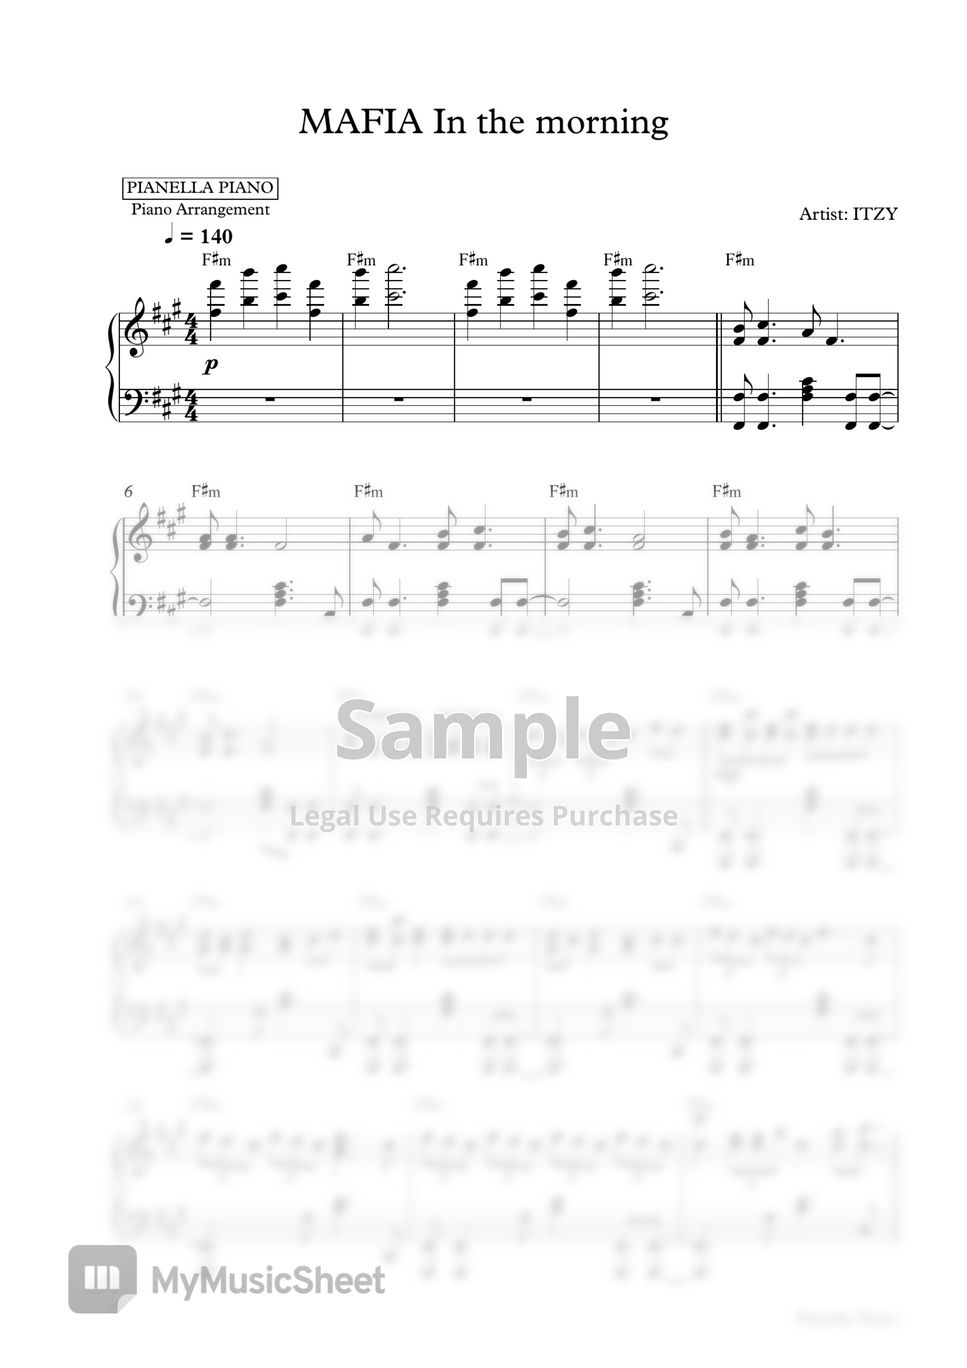 ITZY - MAFIA In the morning (Piano Sheet) by Pianella Piano